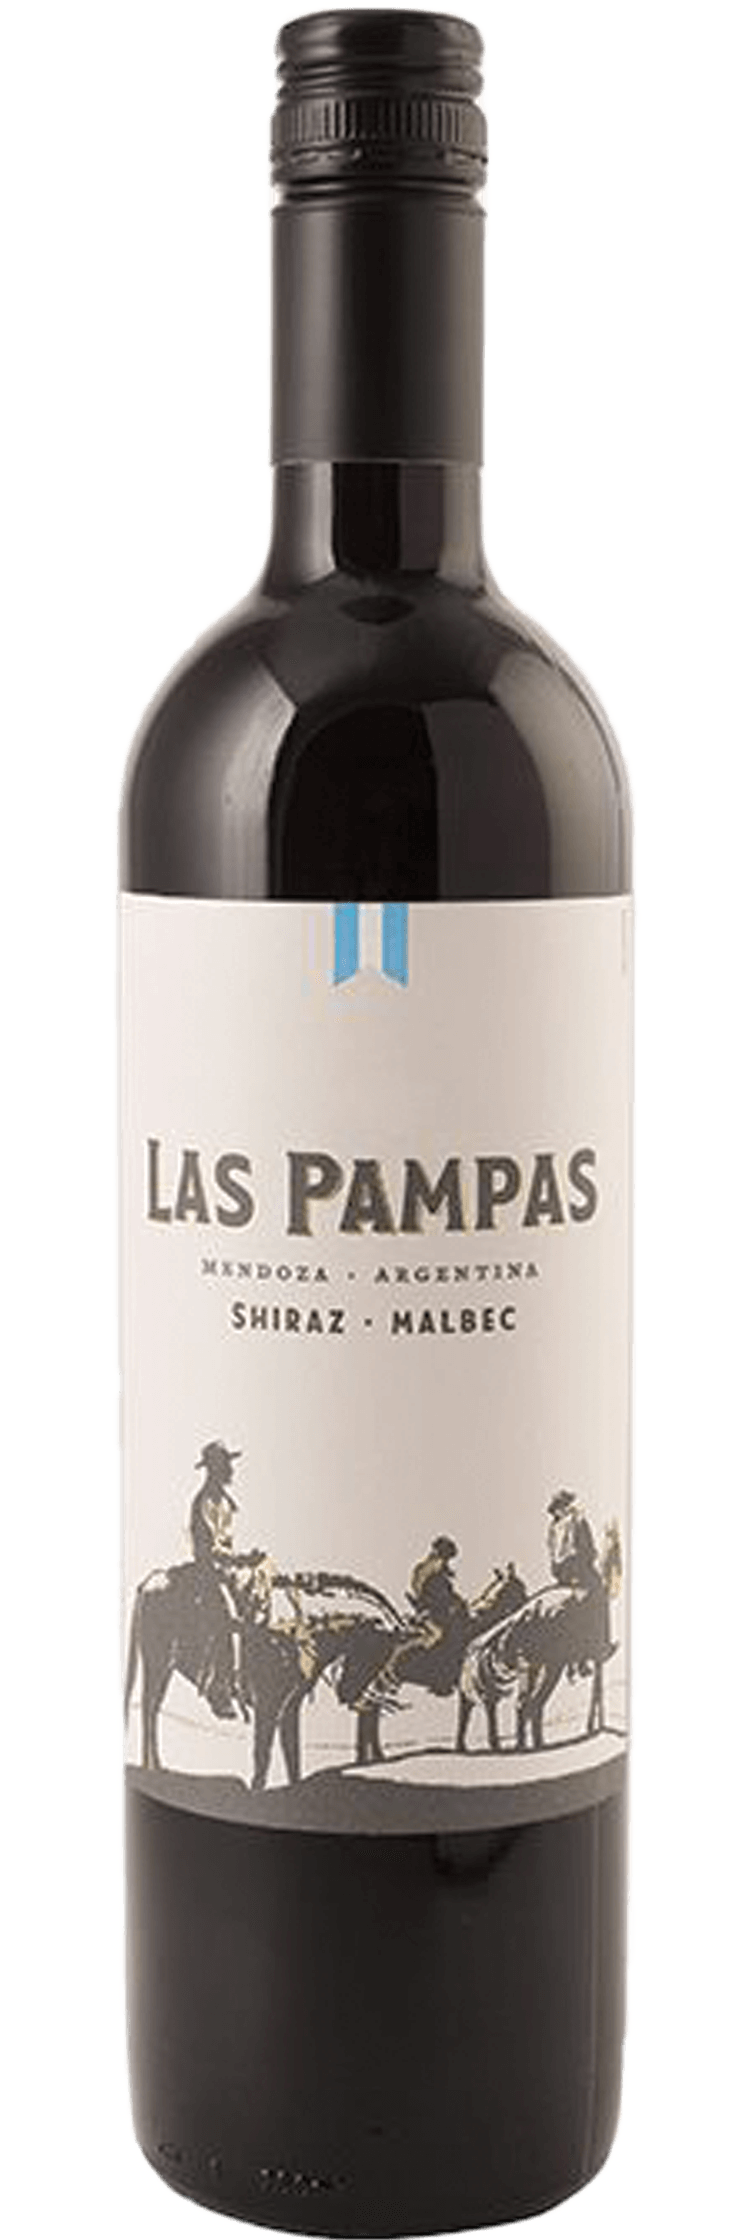 Pampas Shiraz Malbec